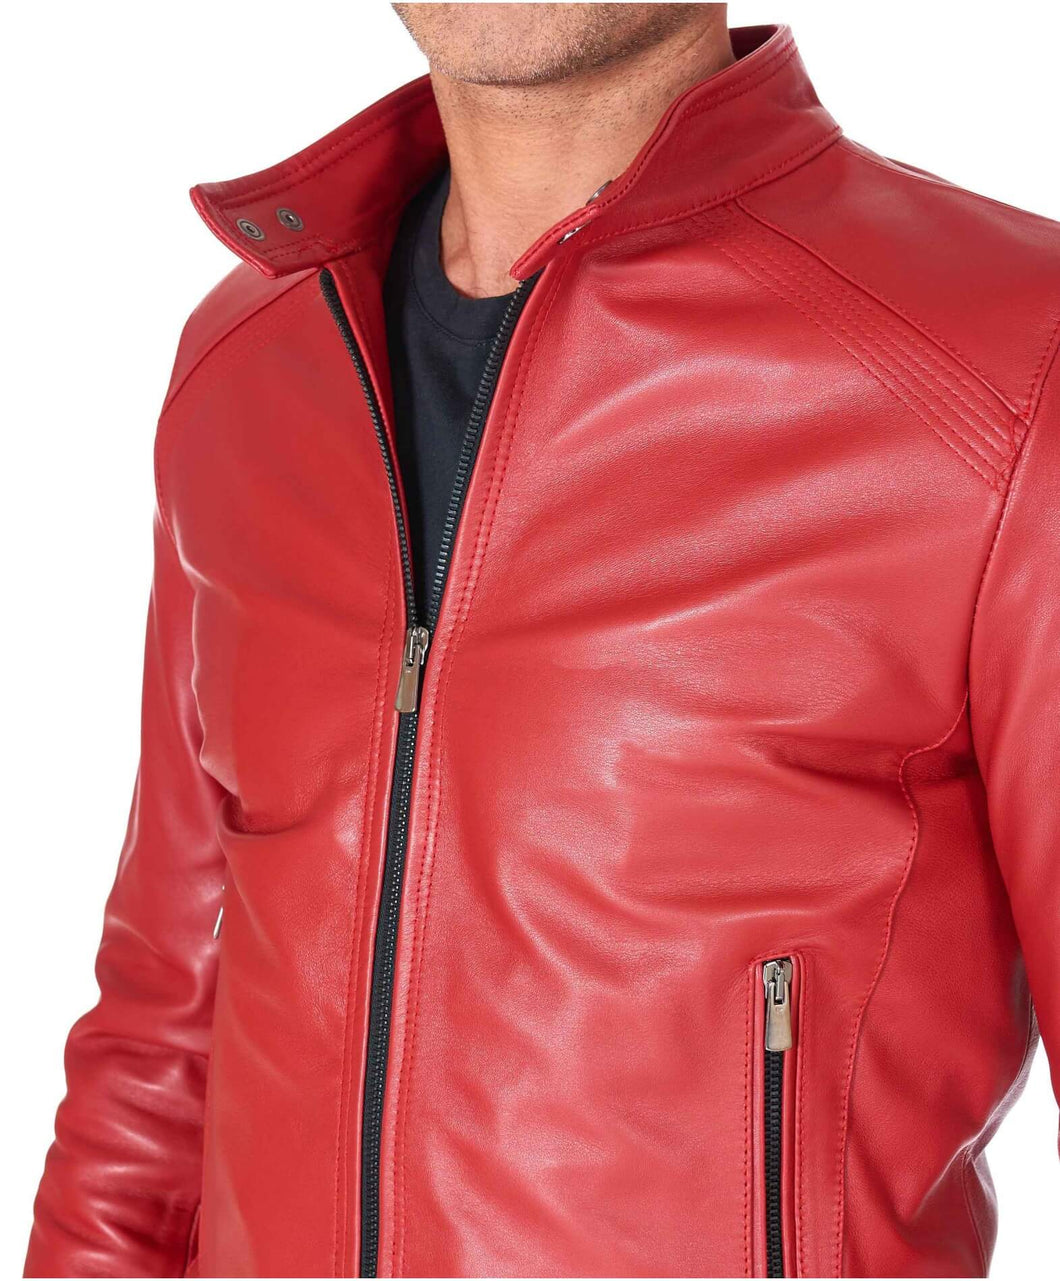 Stylish Mens Red leather biker jacket